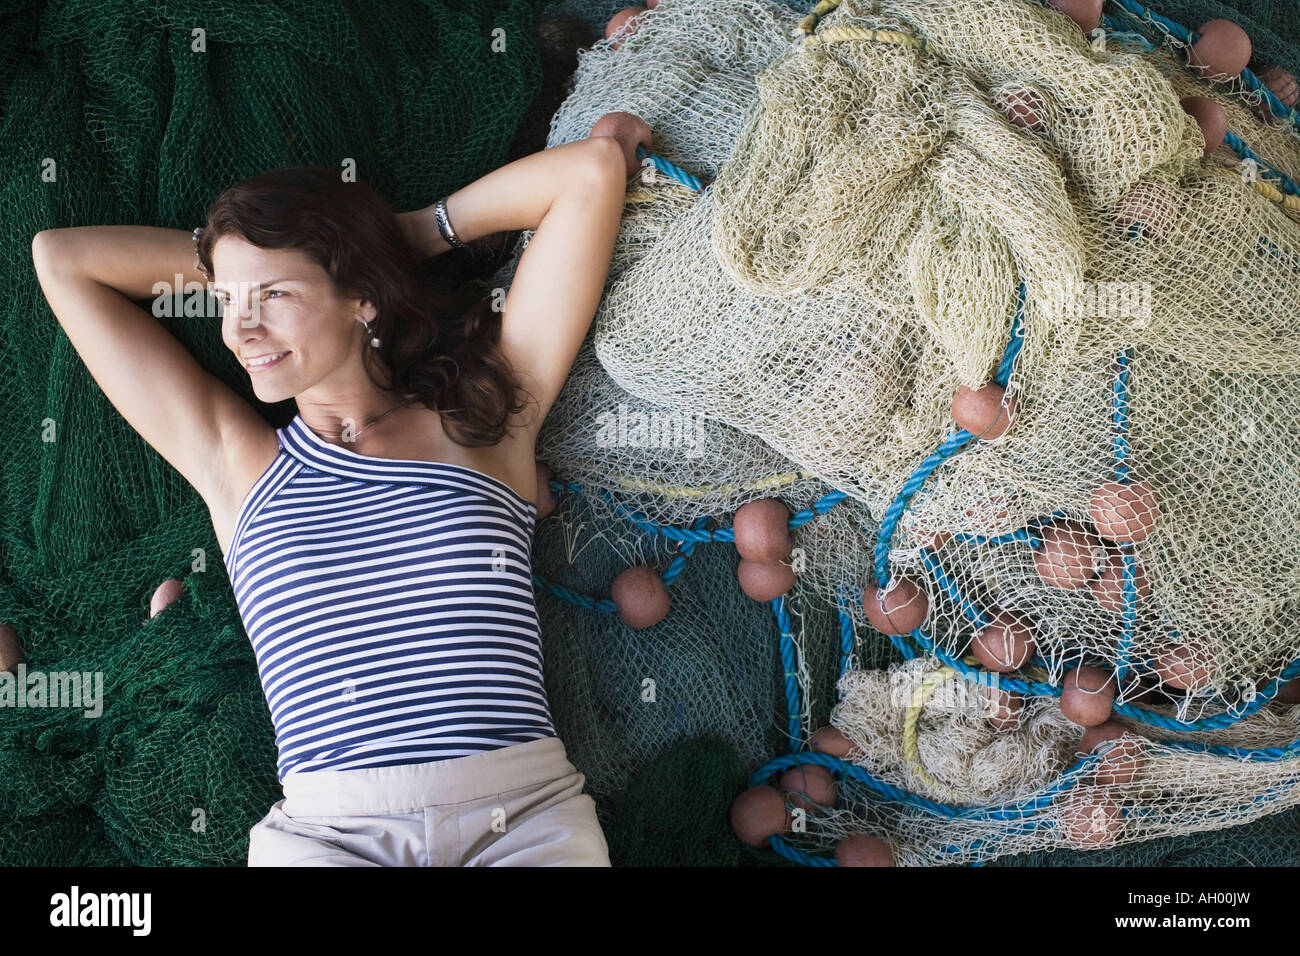 https://c8.alamy.com/comp/AH00JW/high-angle-view-of-a-mid-adult-woman-lying-on-commercial-fishing-nets-AH00JW.jpg